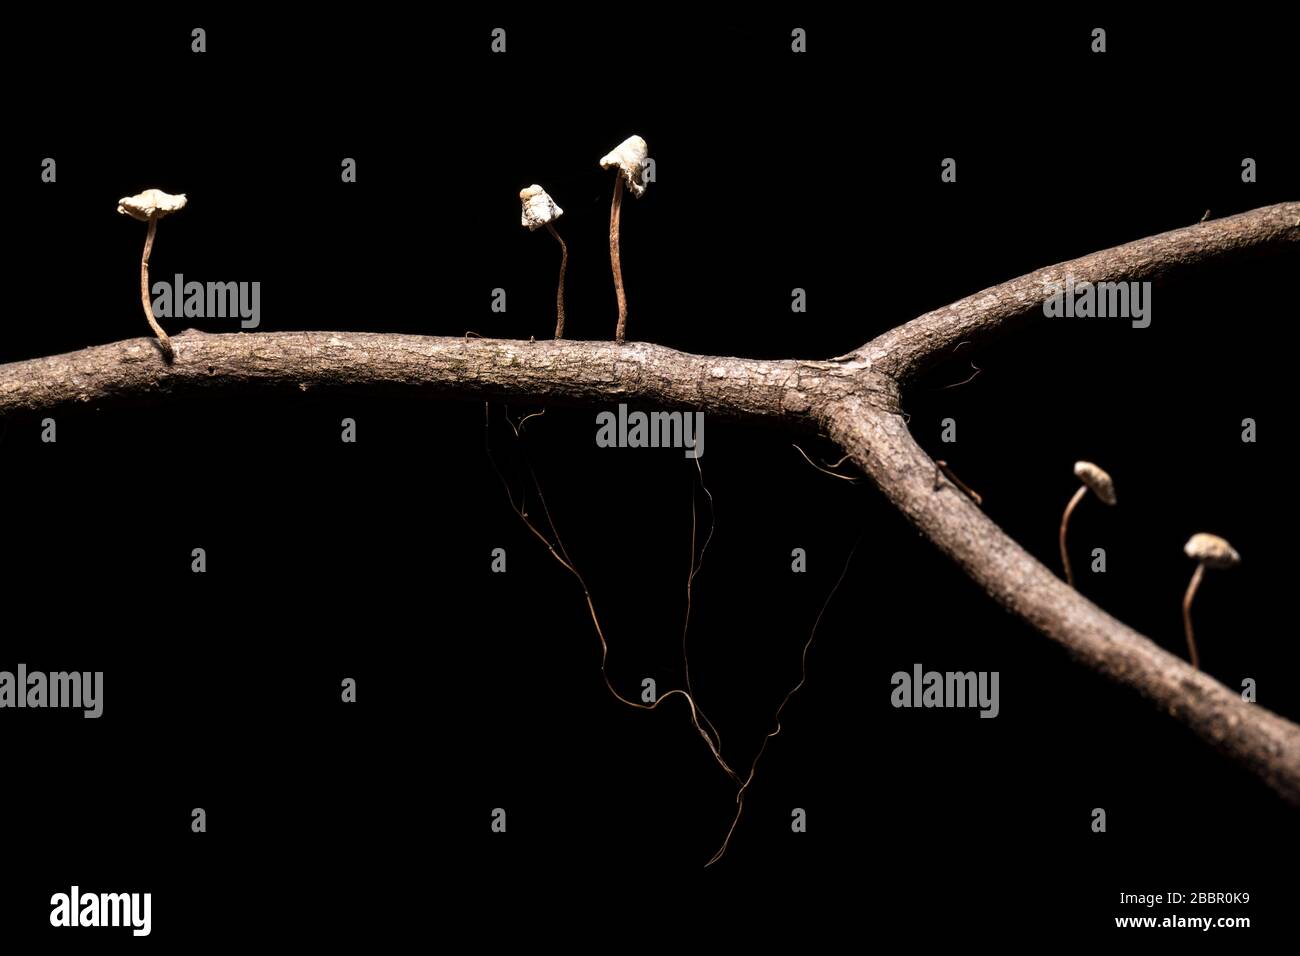 Close-up image of tiny white mushrooms growing on tree branch against a black background - Brevard, North Carolina, USA Stock Photo